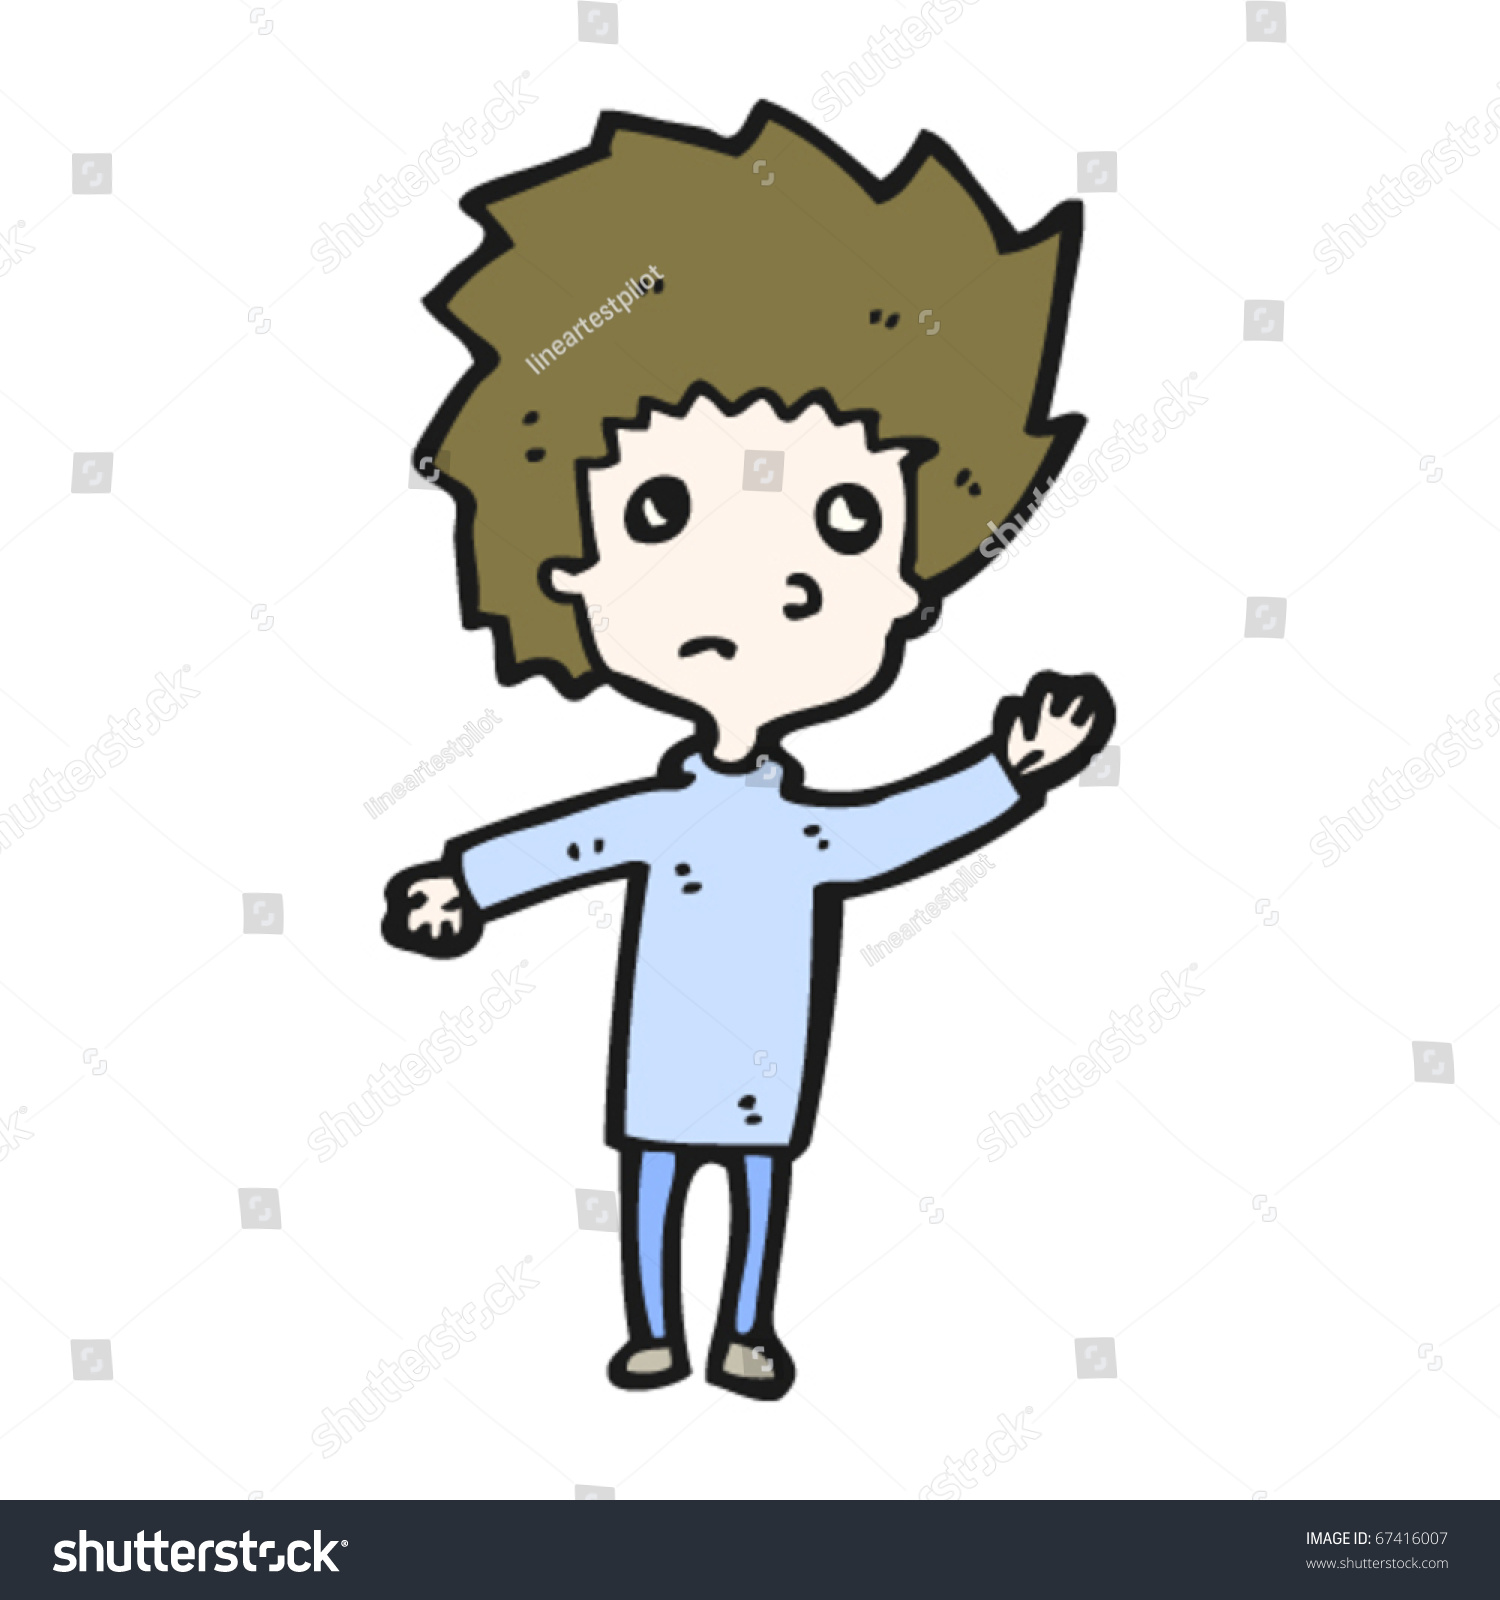 Unhappy Man Cartoon Stock Vector Illustration 67416007 : Shutterstock